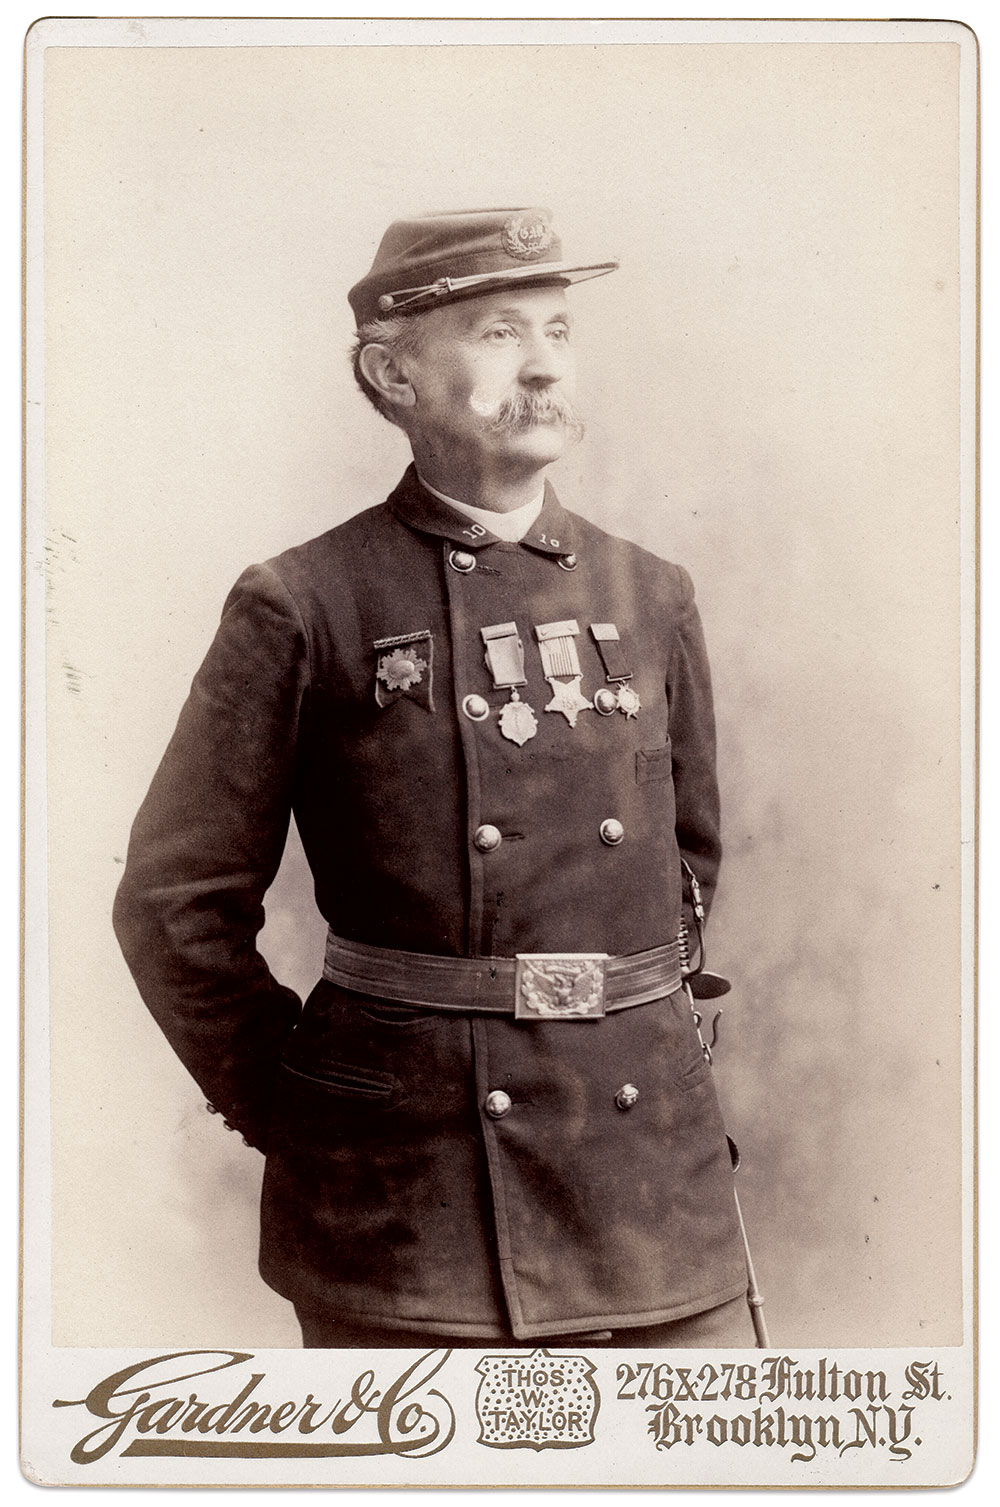 Private LeMoyne Burleigh (1845-1907), 1st New York Cavalry, circa 1890. Cabinet card by Gardner & Co. of Brooklyn, N.Y. 